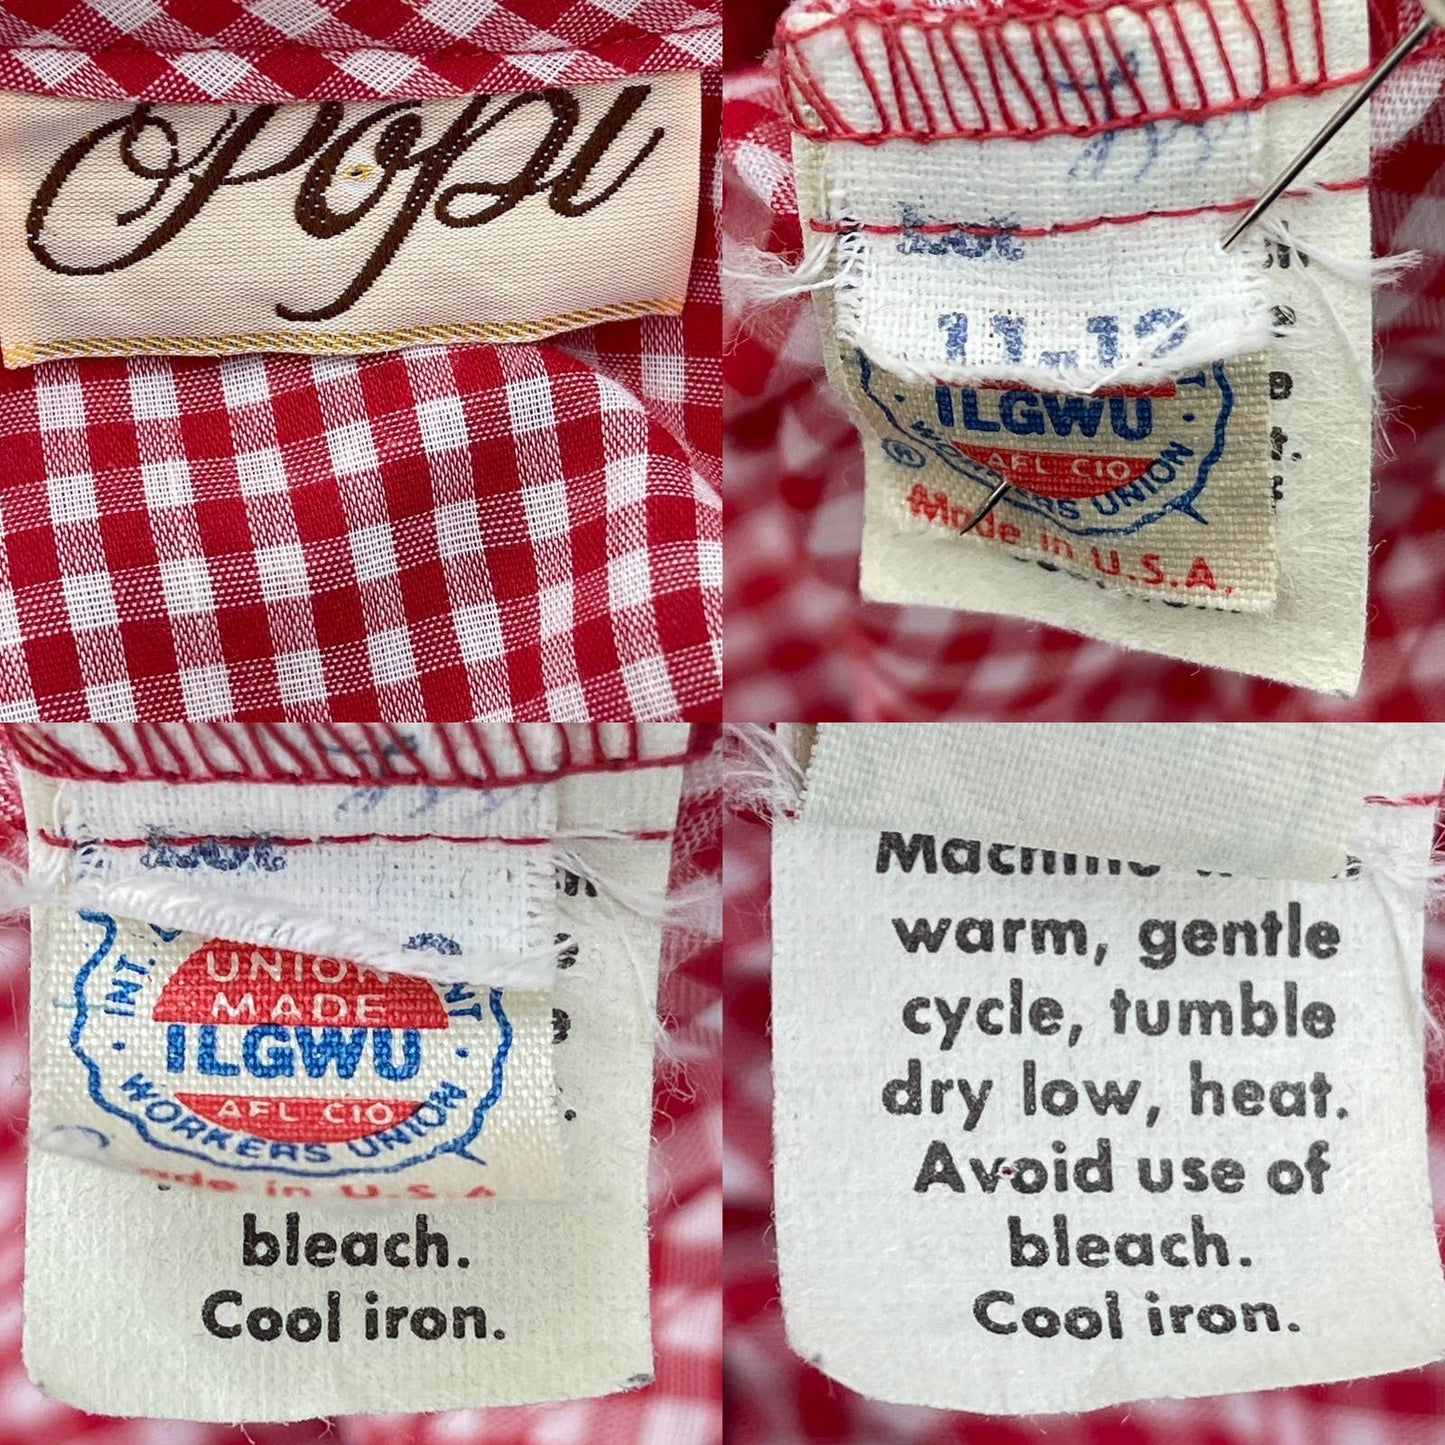 70s Vintage Cotton Gingham Midi Dress Red and White Prairie USA Popi Size 11 12